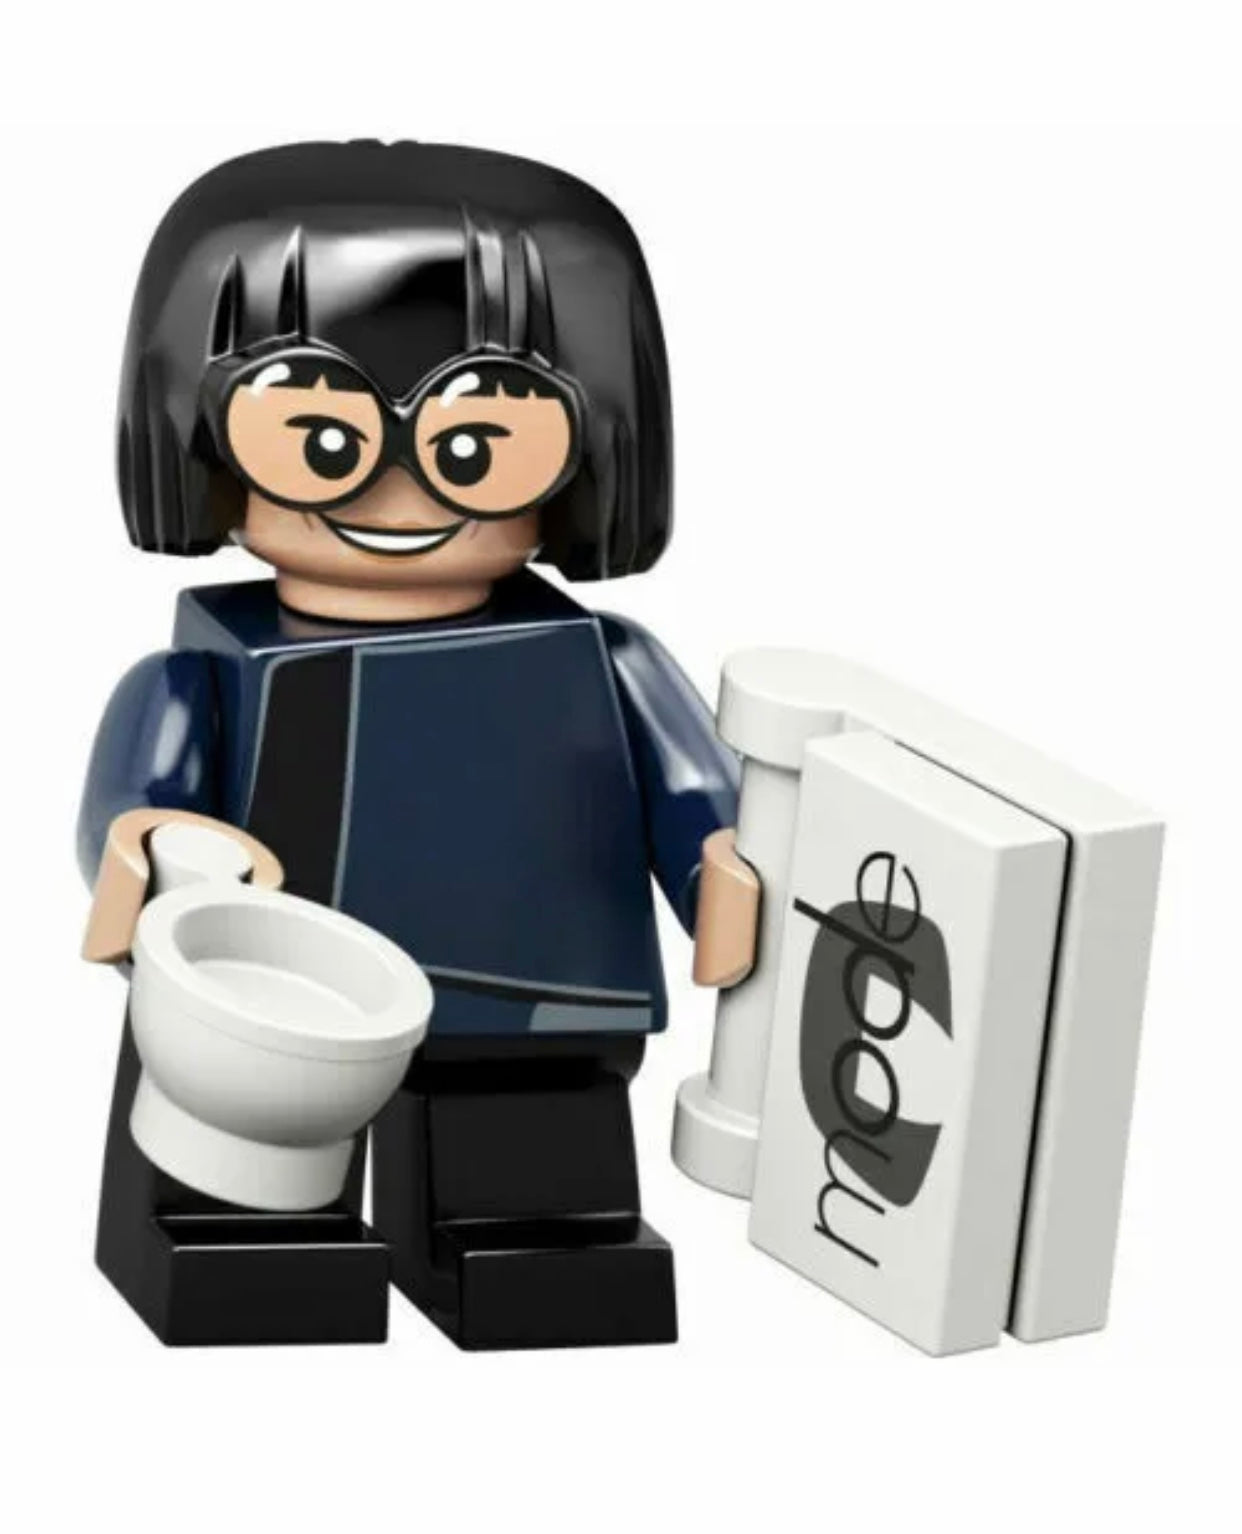 LEGO Disney Series 2 Limited Edition Edna Mode Minifigure 71024